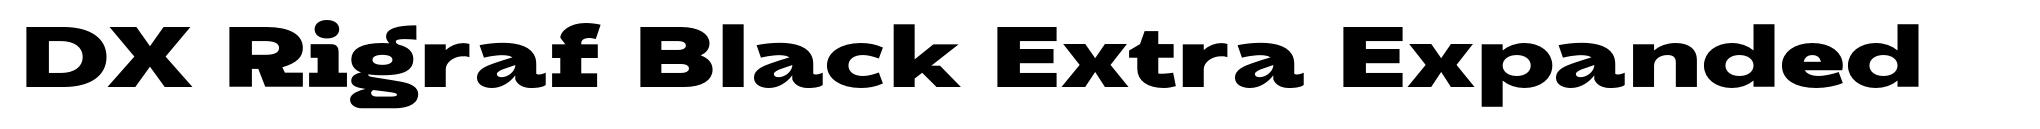 DX Rigraf Black Extra Expanded image